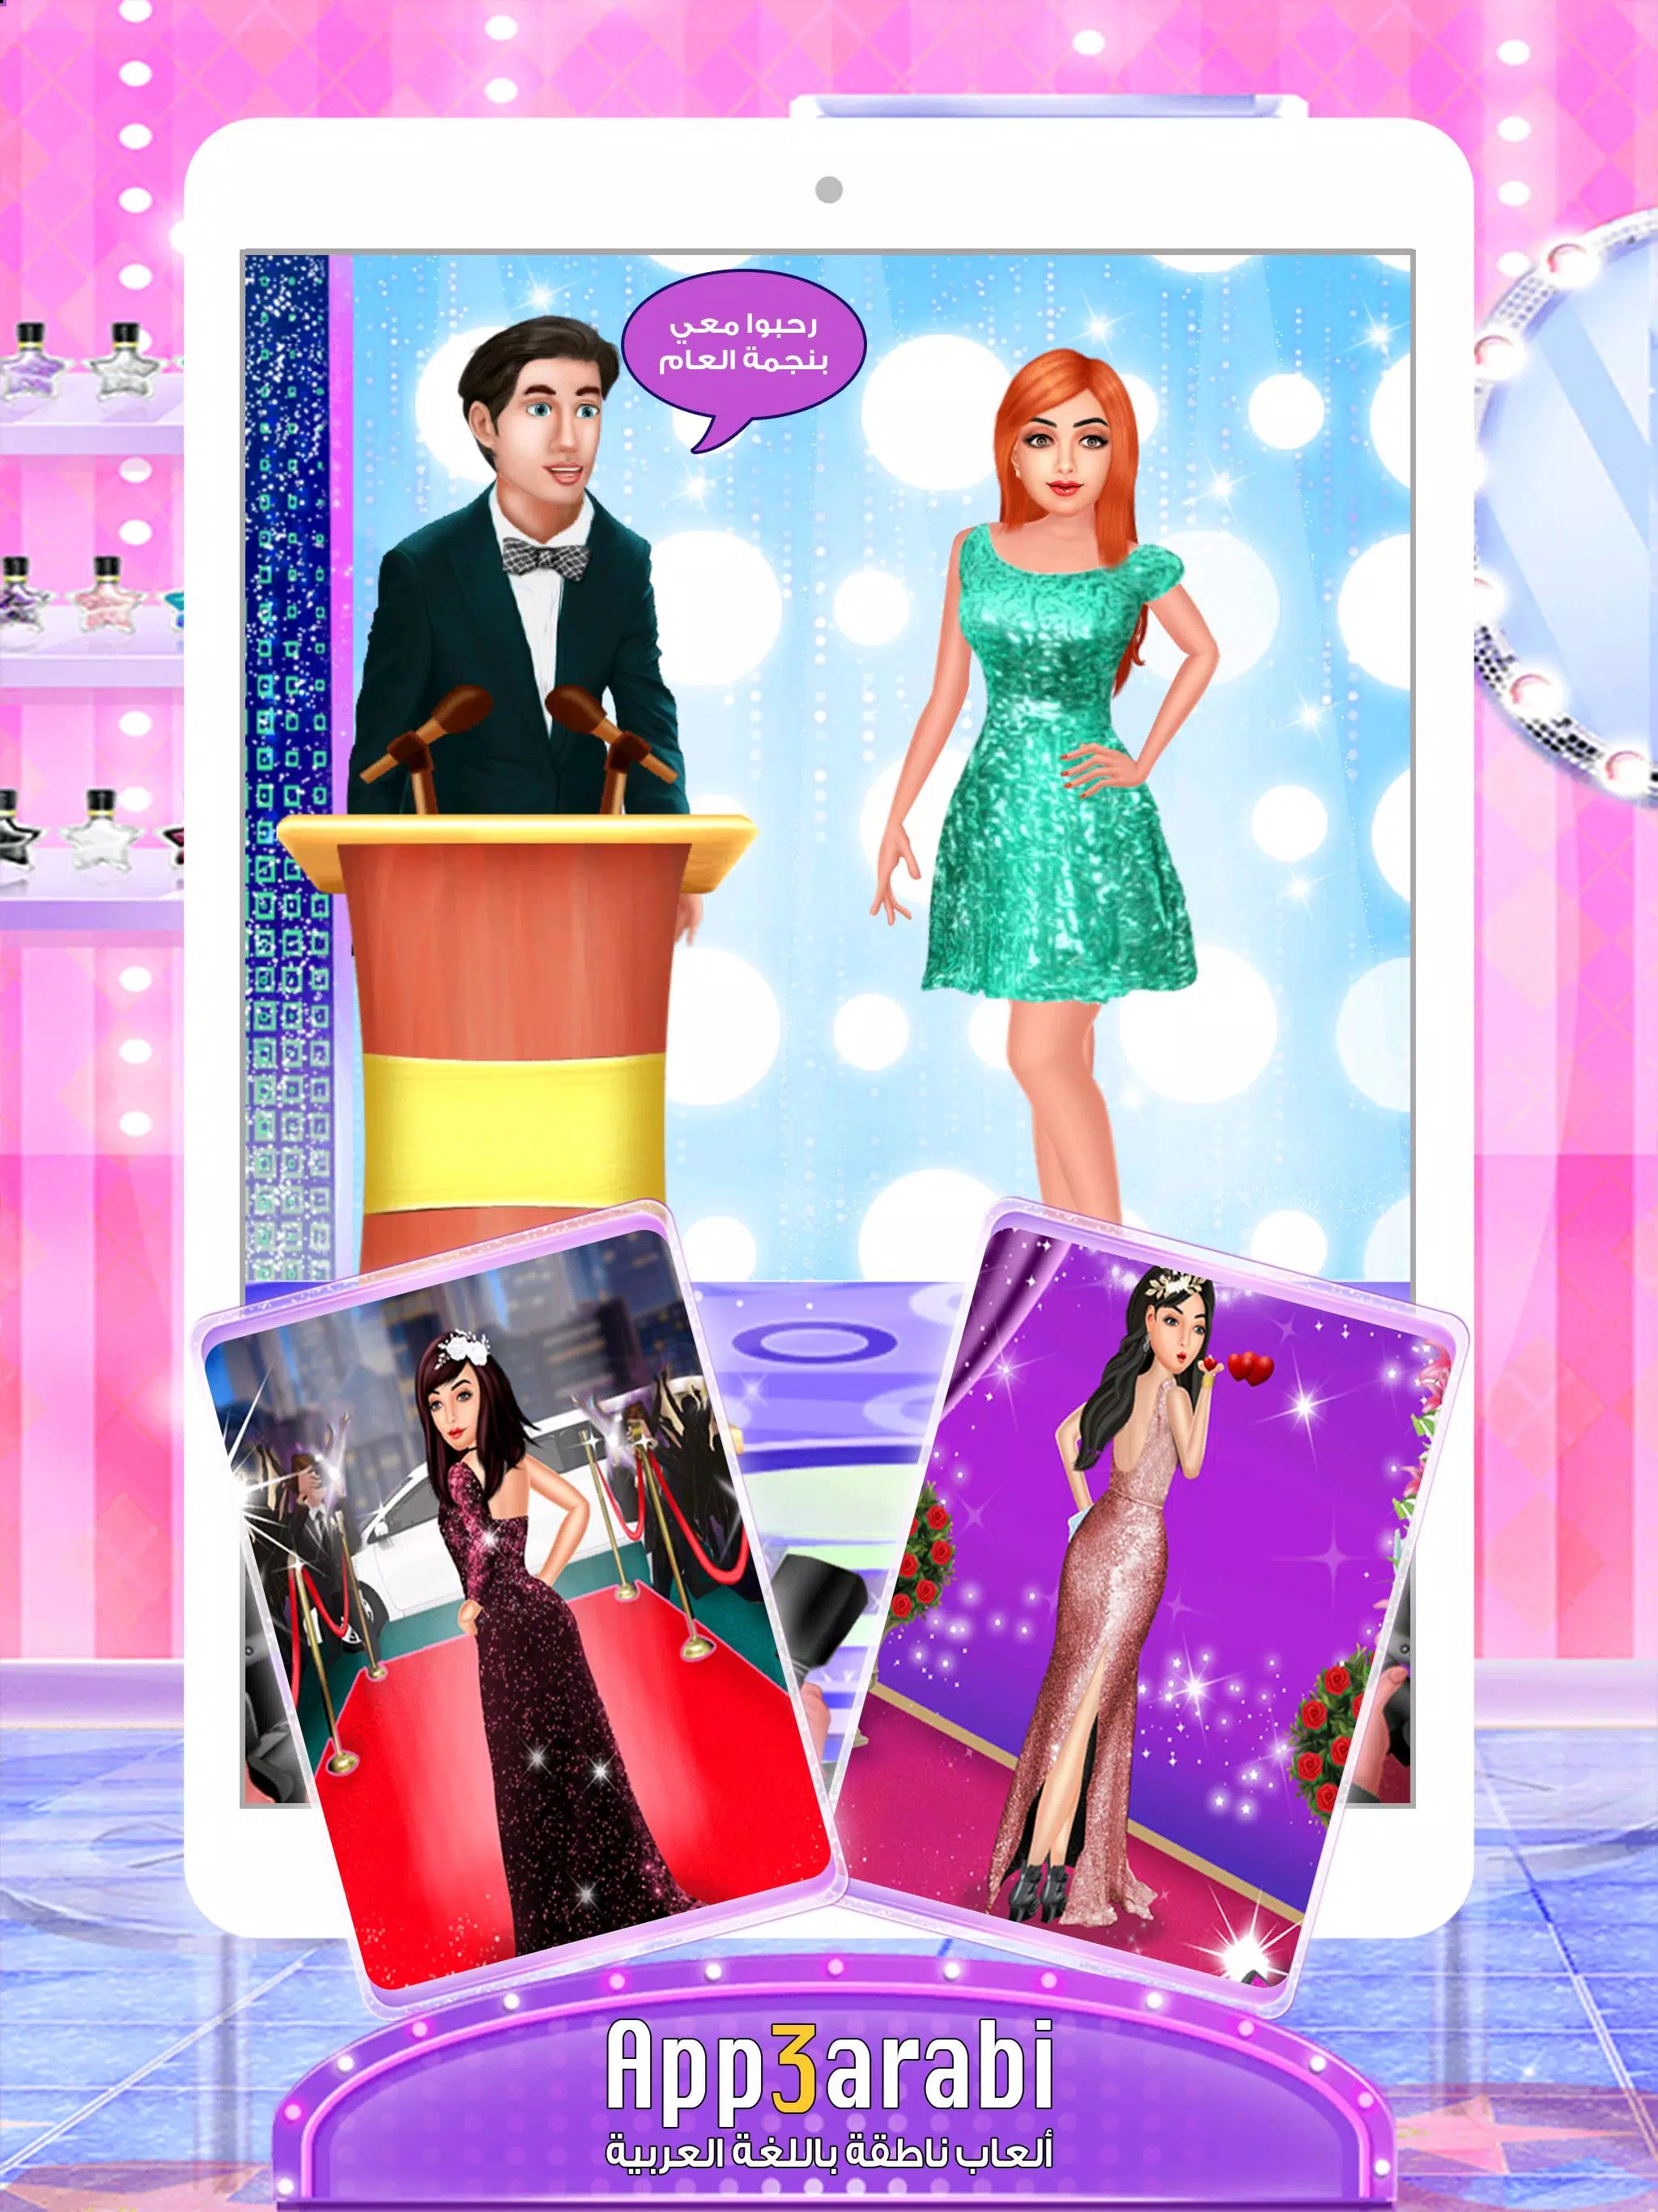 Superstar Princess Makeup Salon - Girl Games for Android - APK Download